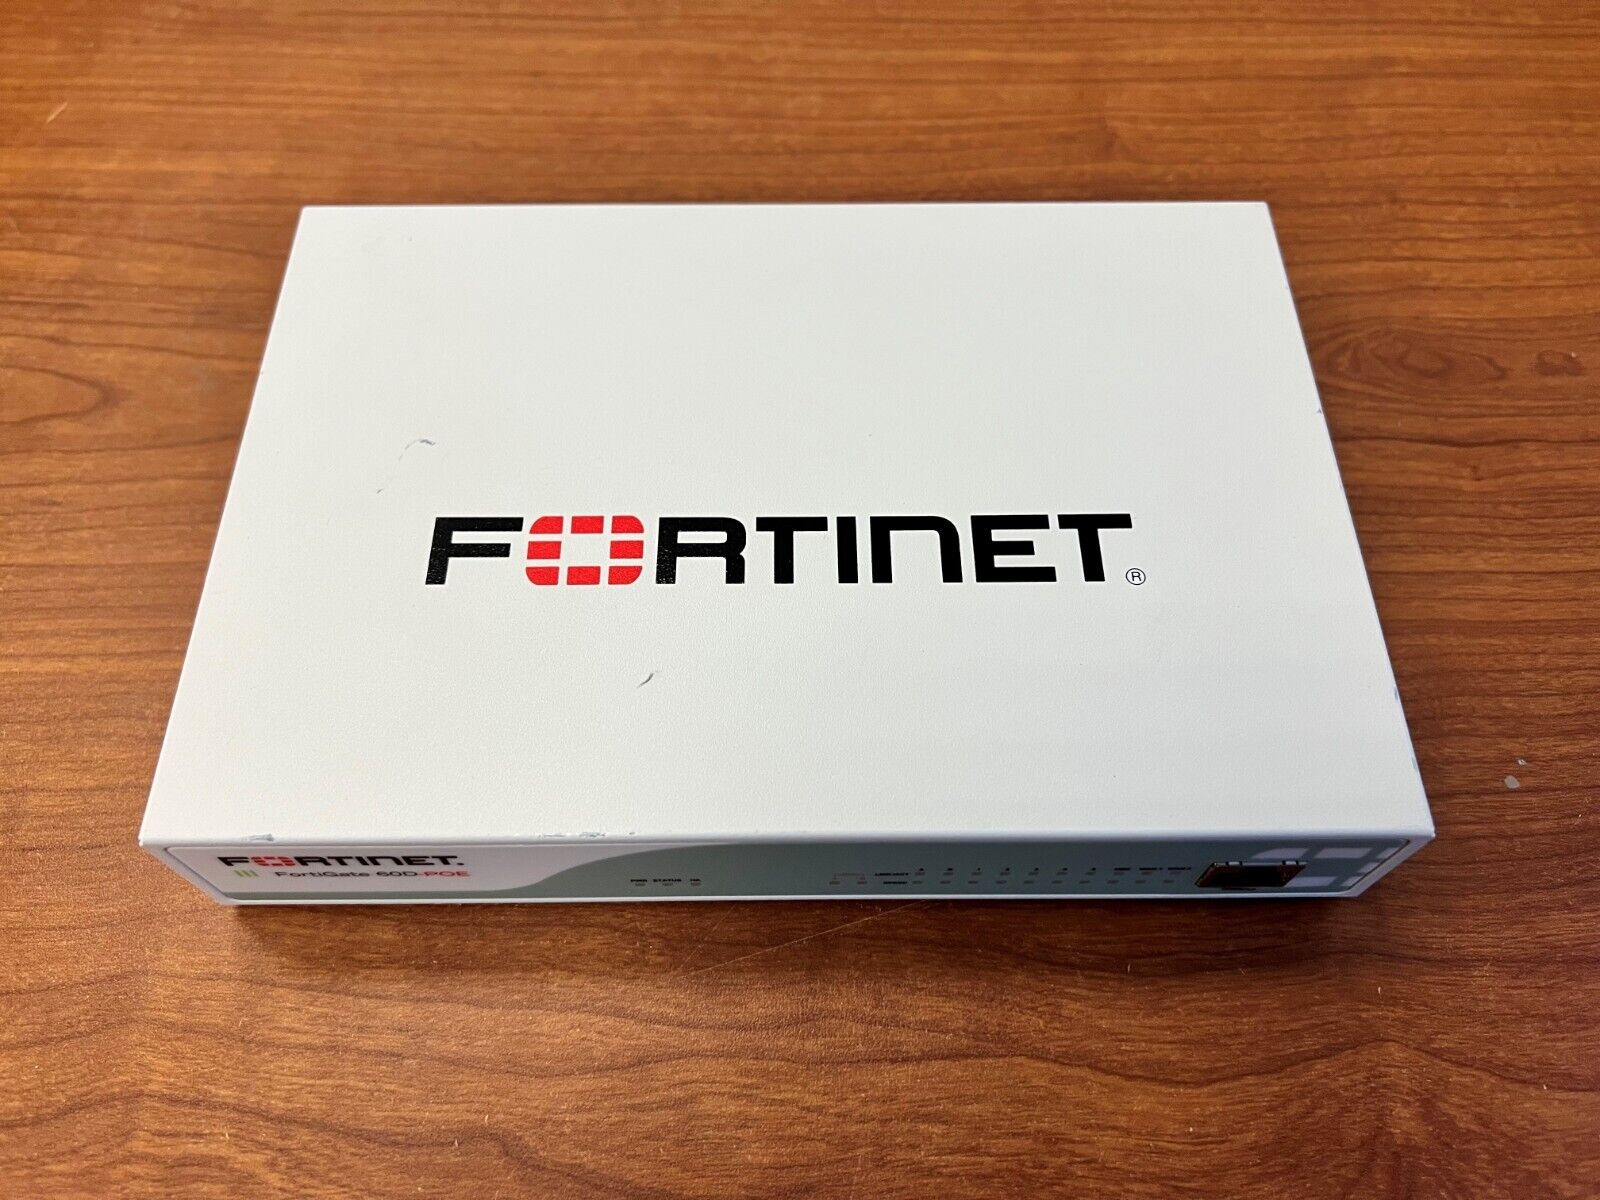 Fortinet FortiGate FG-60D-POE Firewall